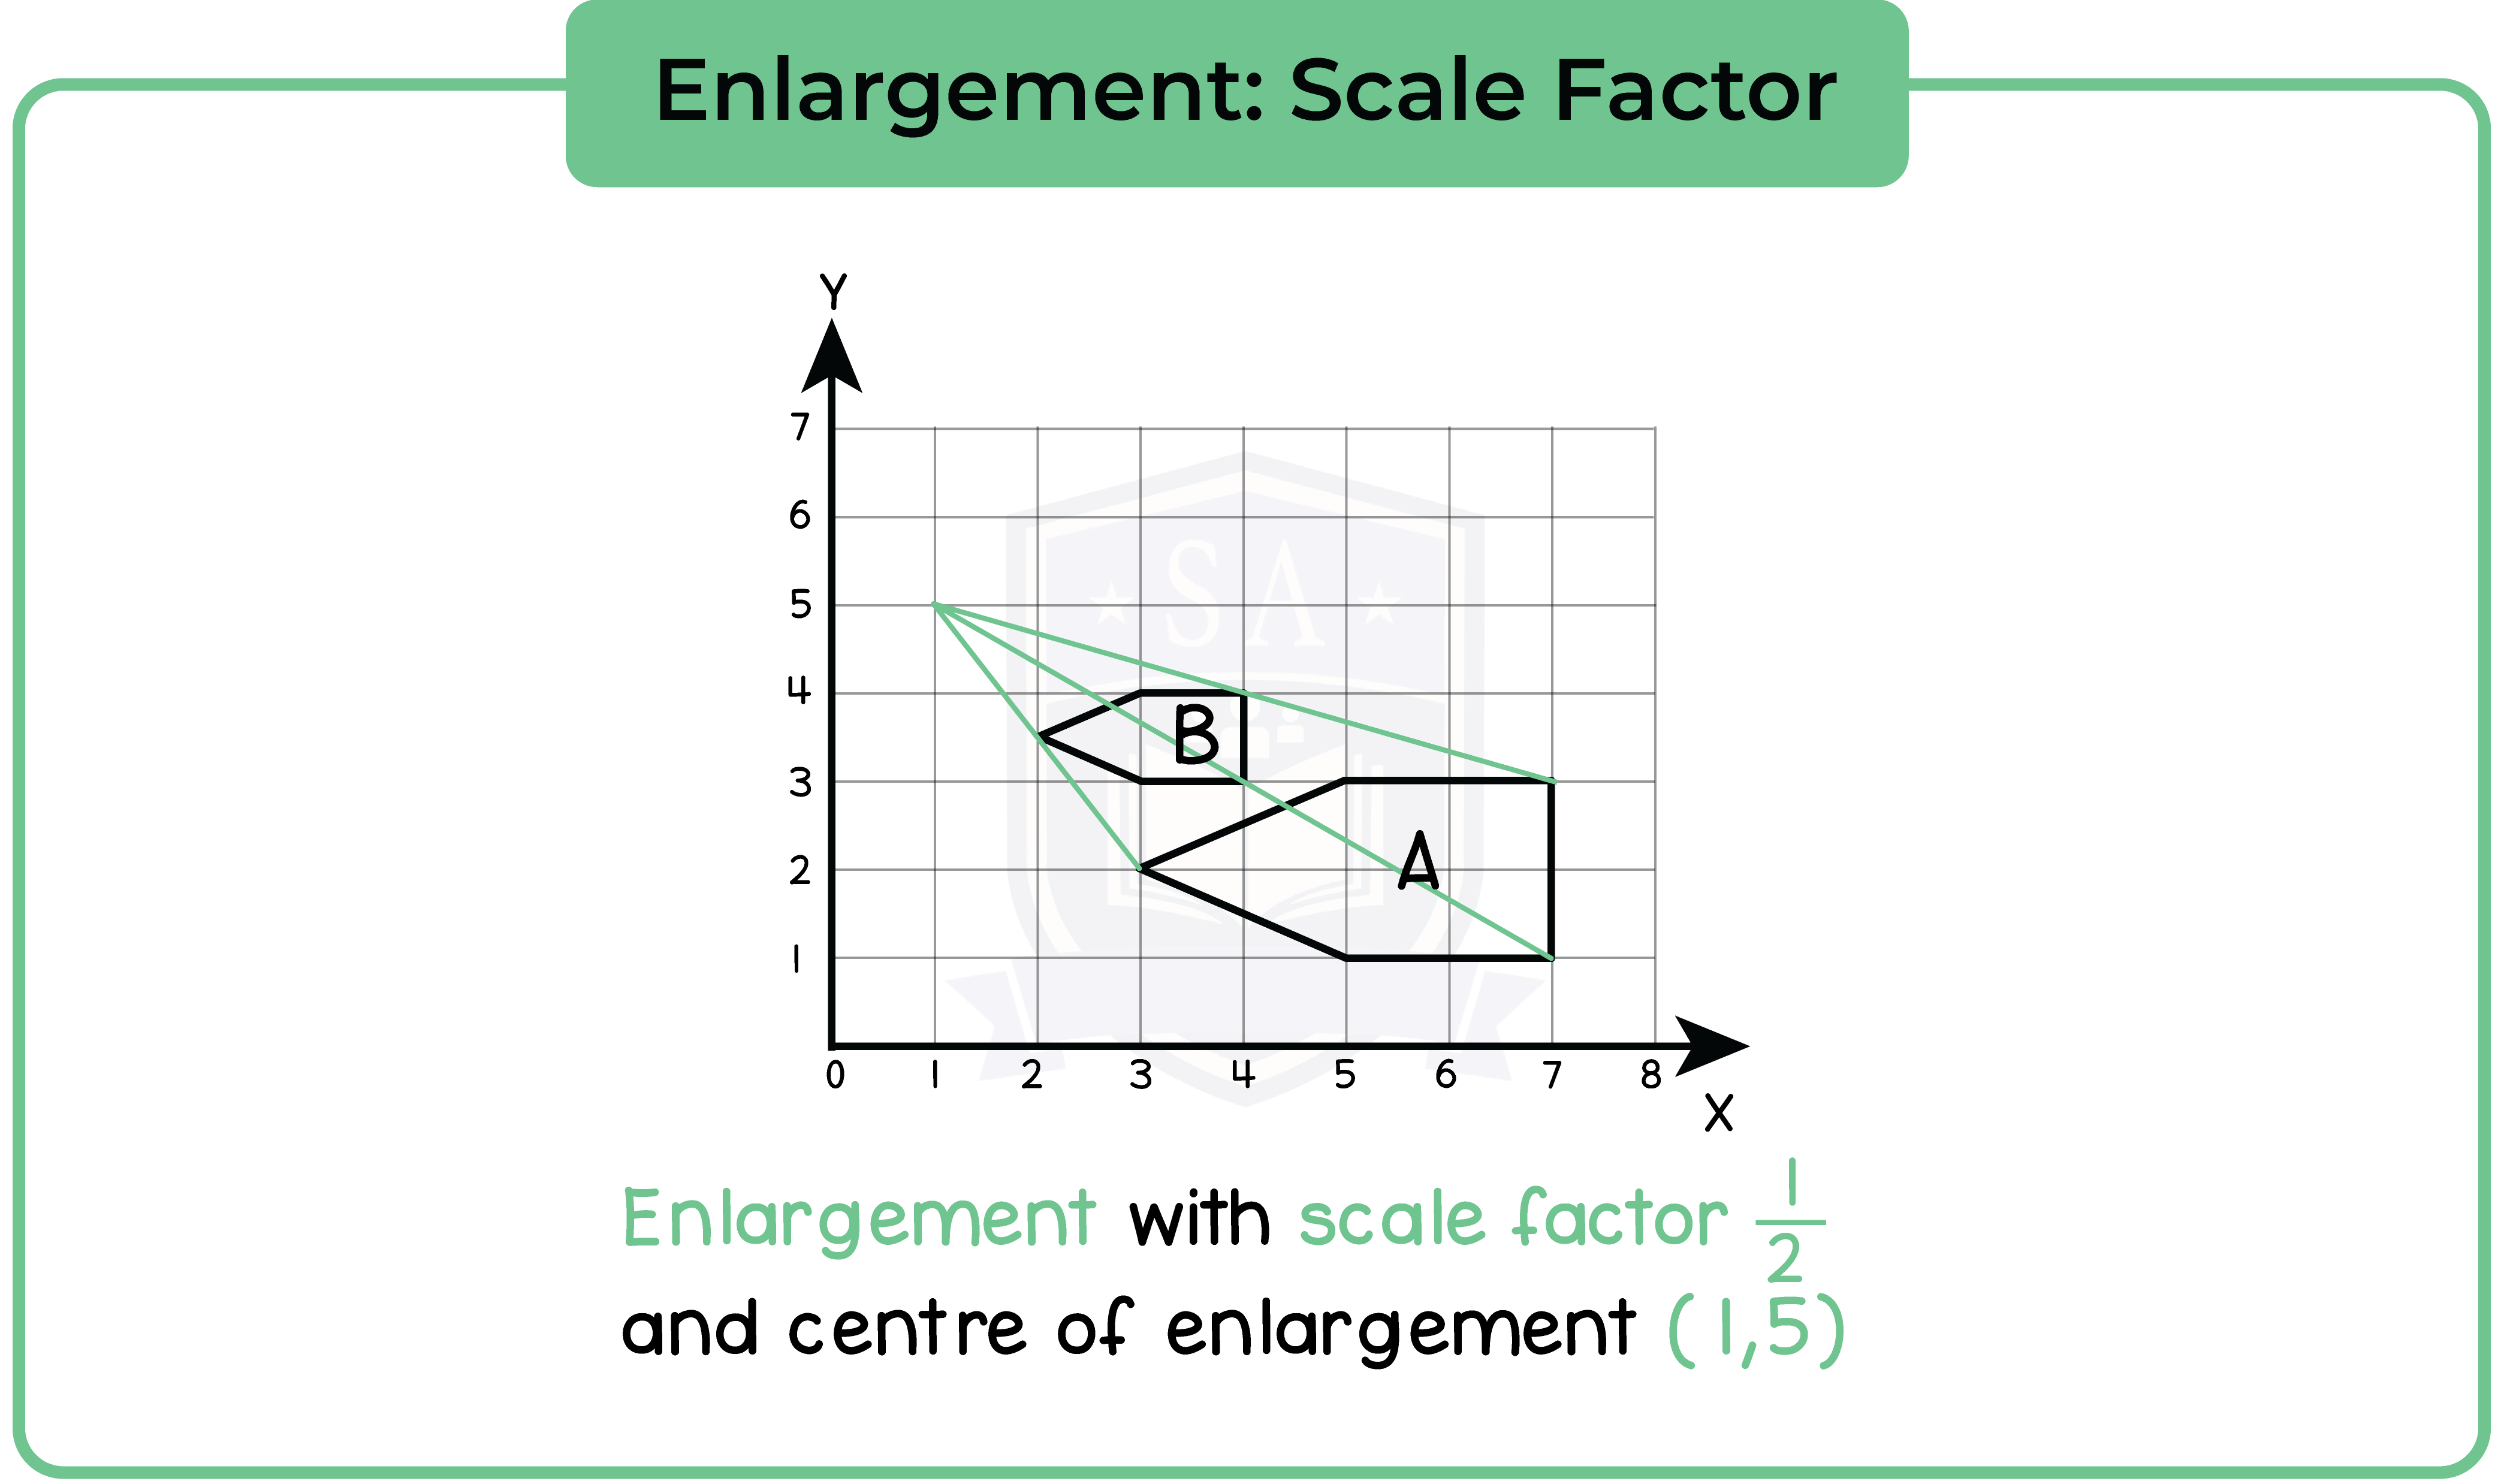 edexcel_igcse_mathematics a_topic 37_transformation geometry_011_Enlargement: Scale Factor